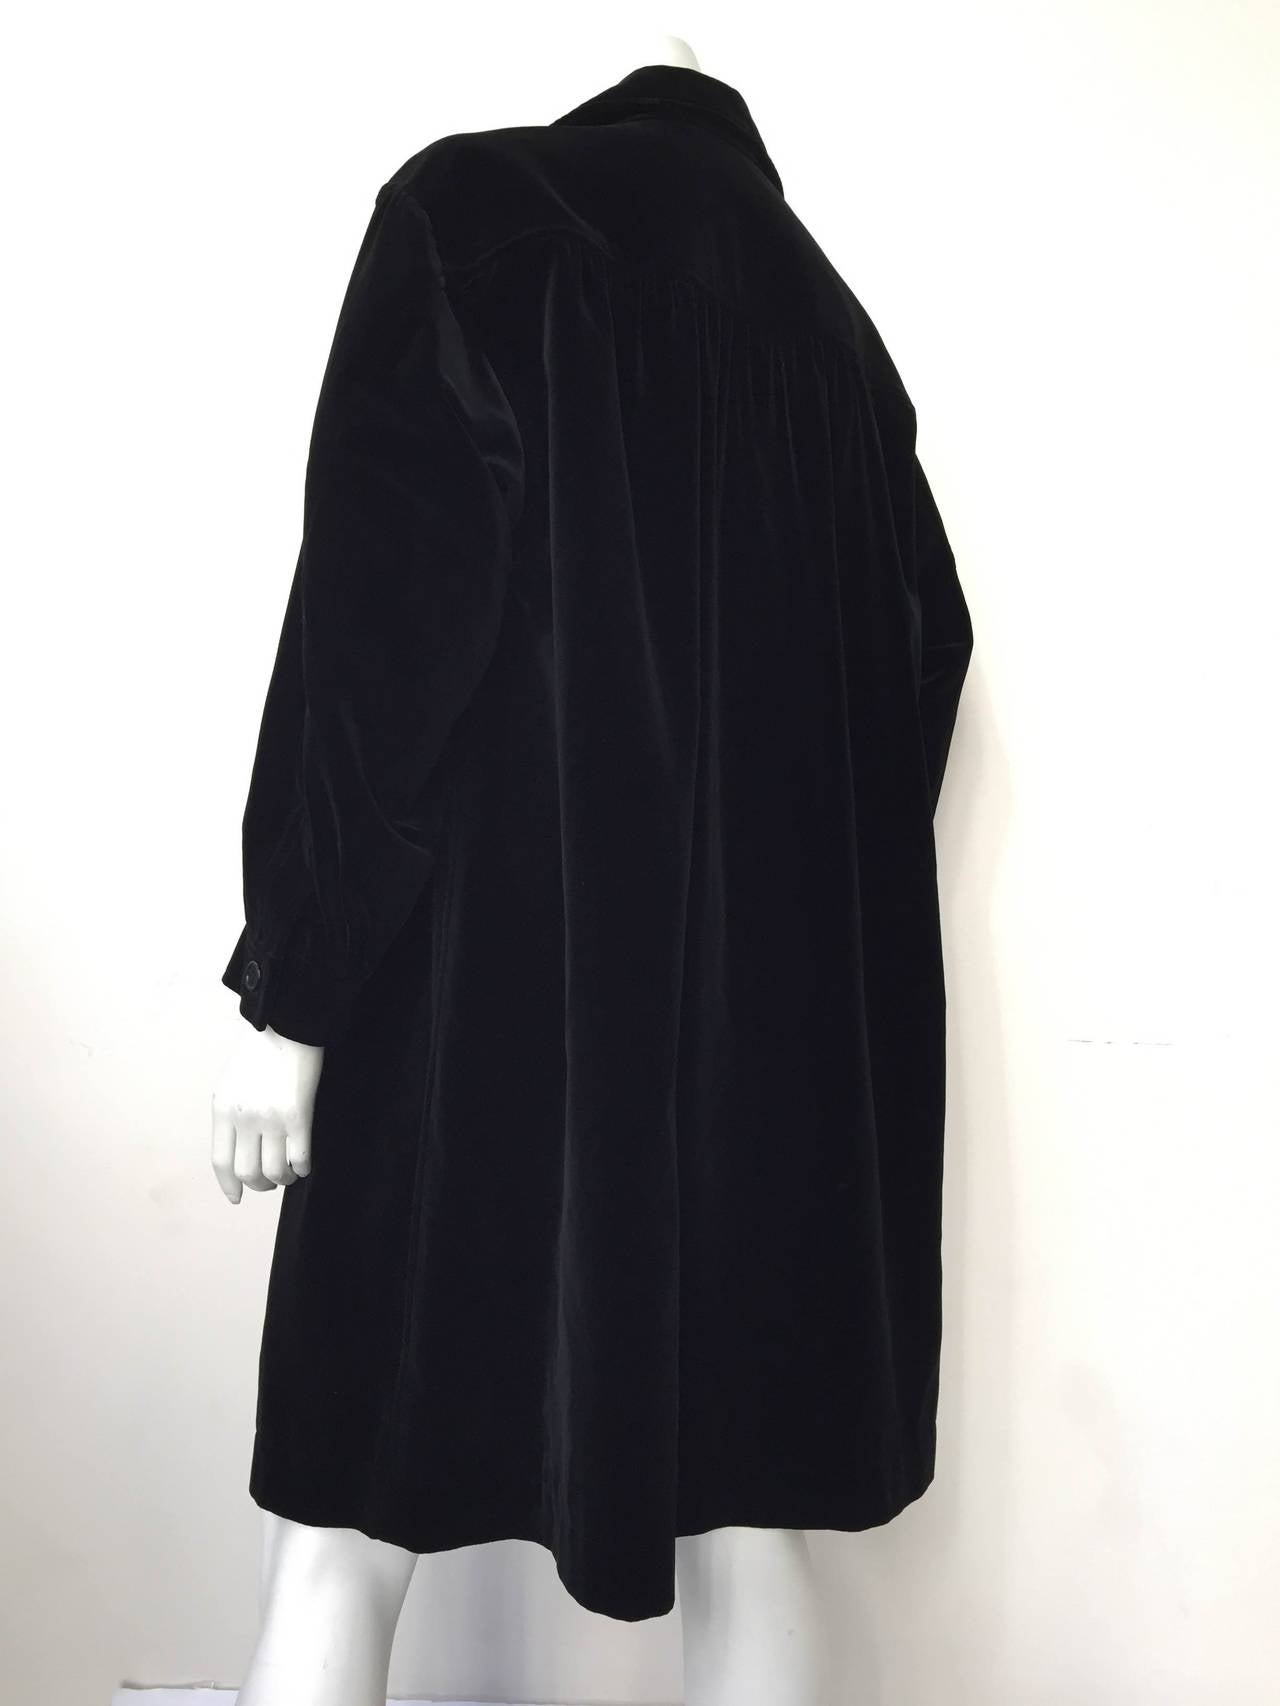 Women's Saint Laurent Rive Gauche 70s black velvet coat.